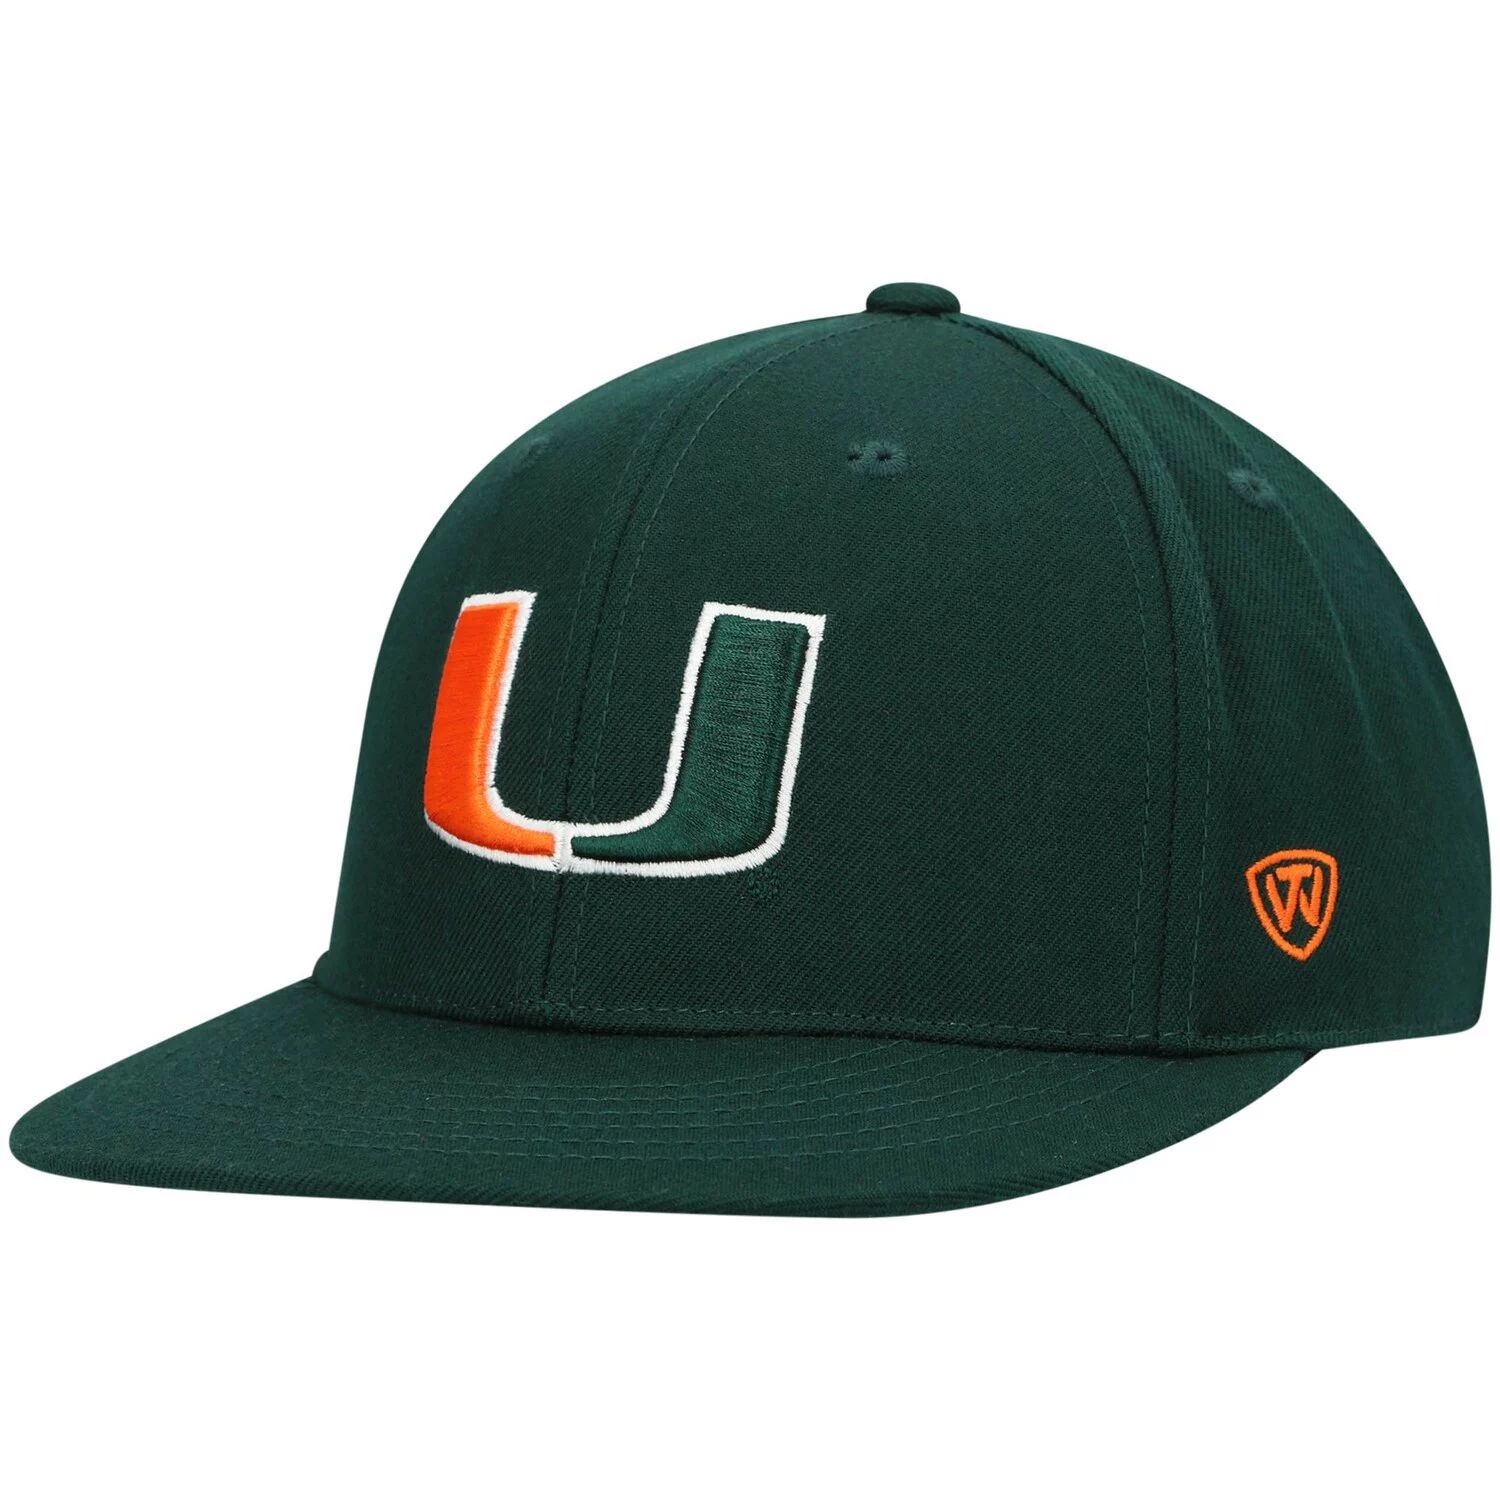 Мужская приталенная шляпа зеленого цвета Top of the World Miami Hurricanes Team мужская двухцветная приталенная шляпа top of the world черного зеленого цвета команды miami hurricanes team